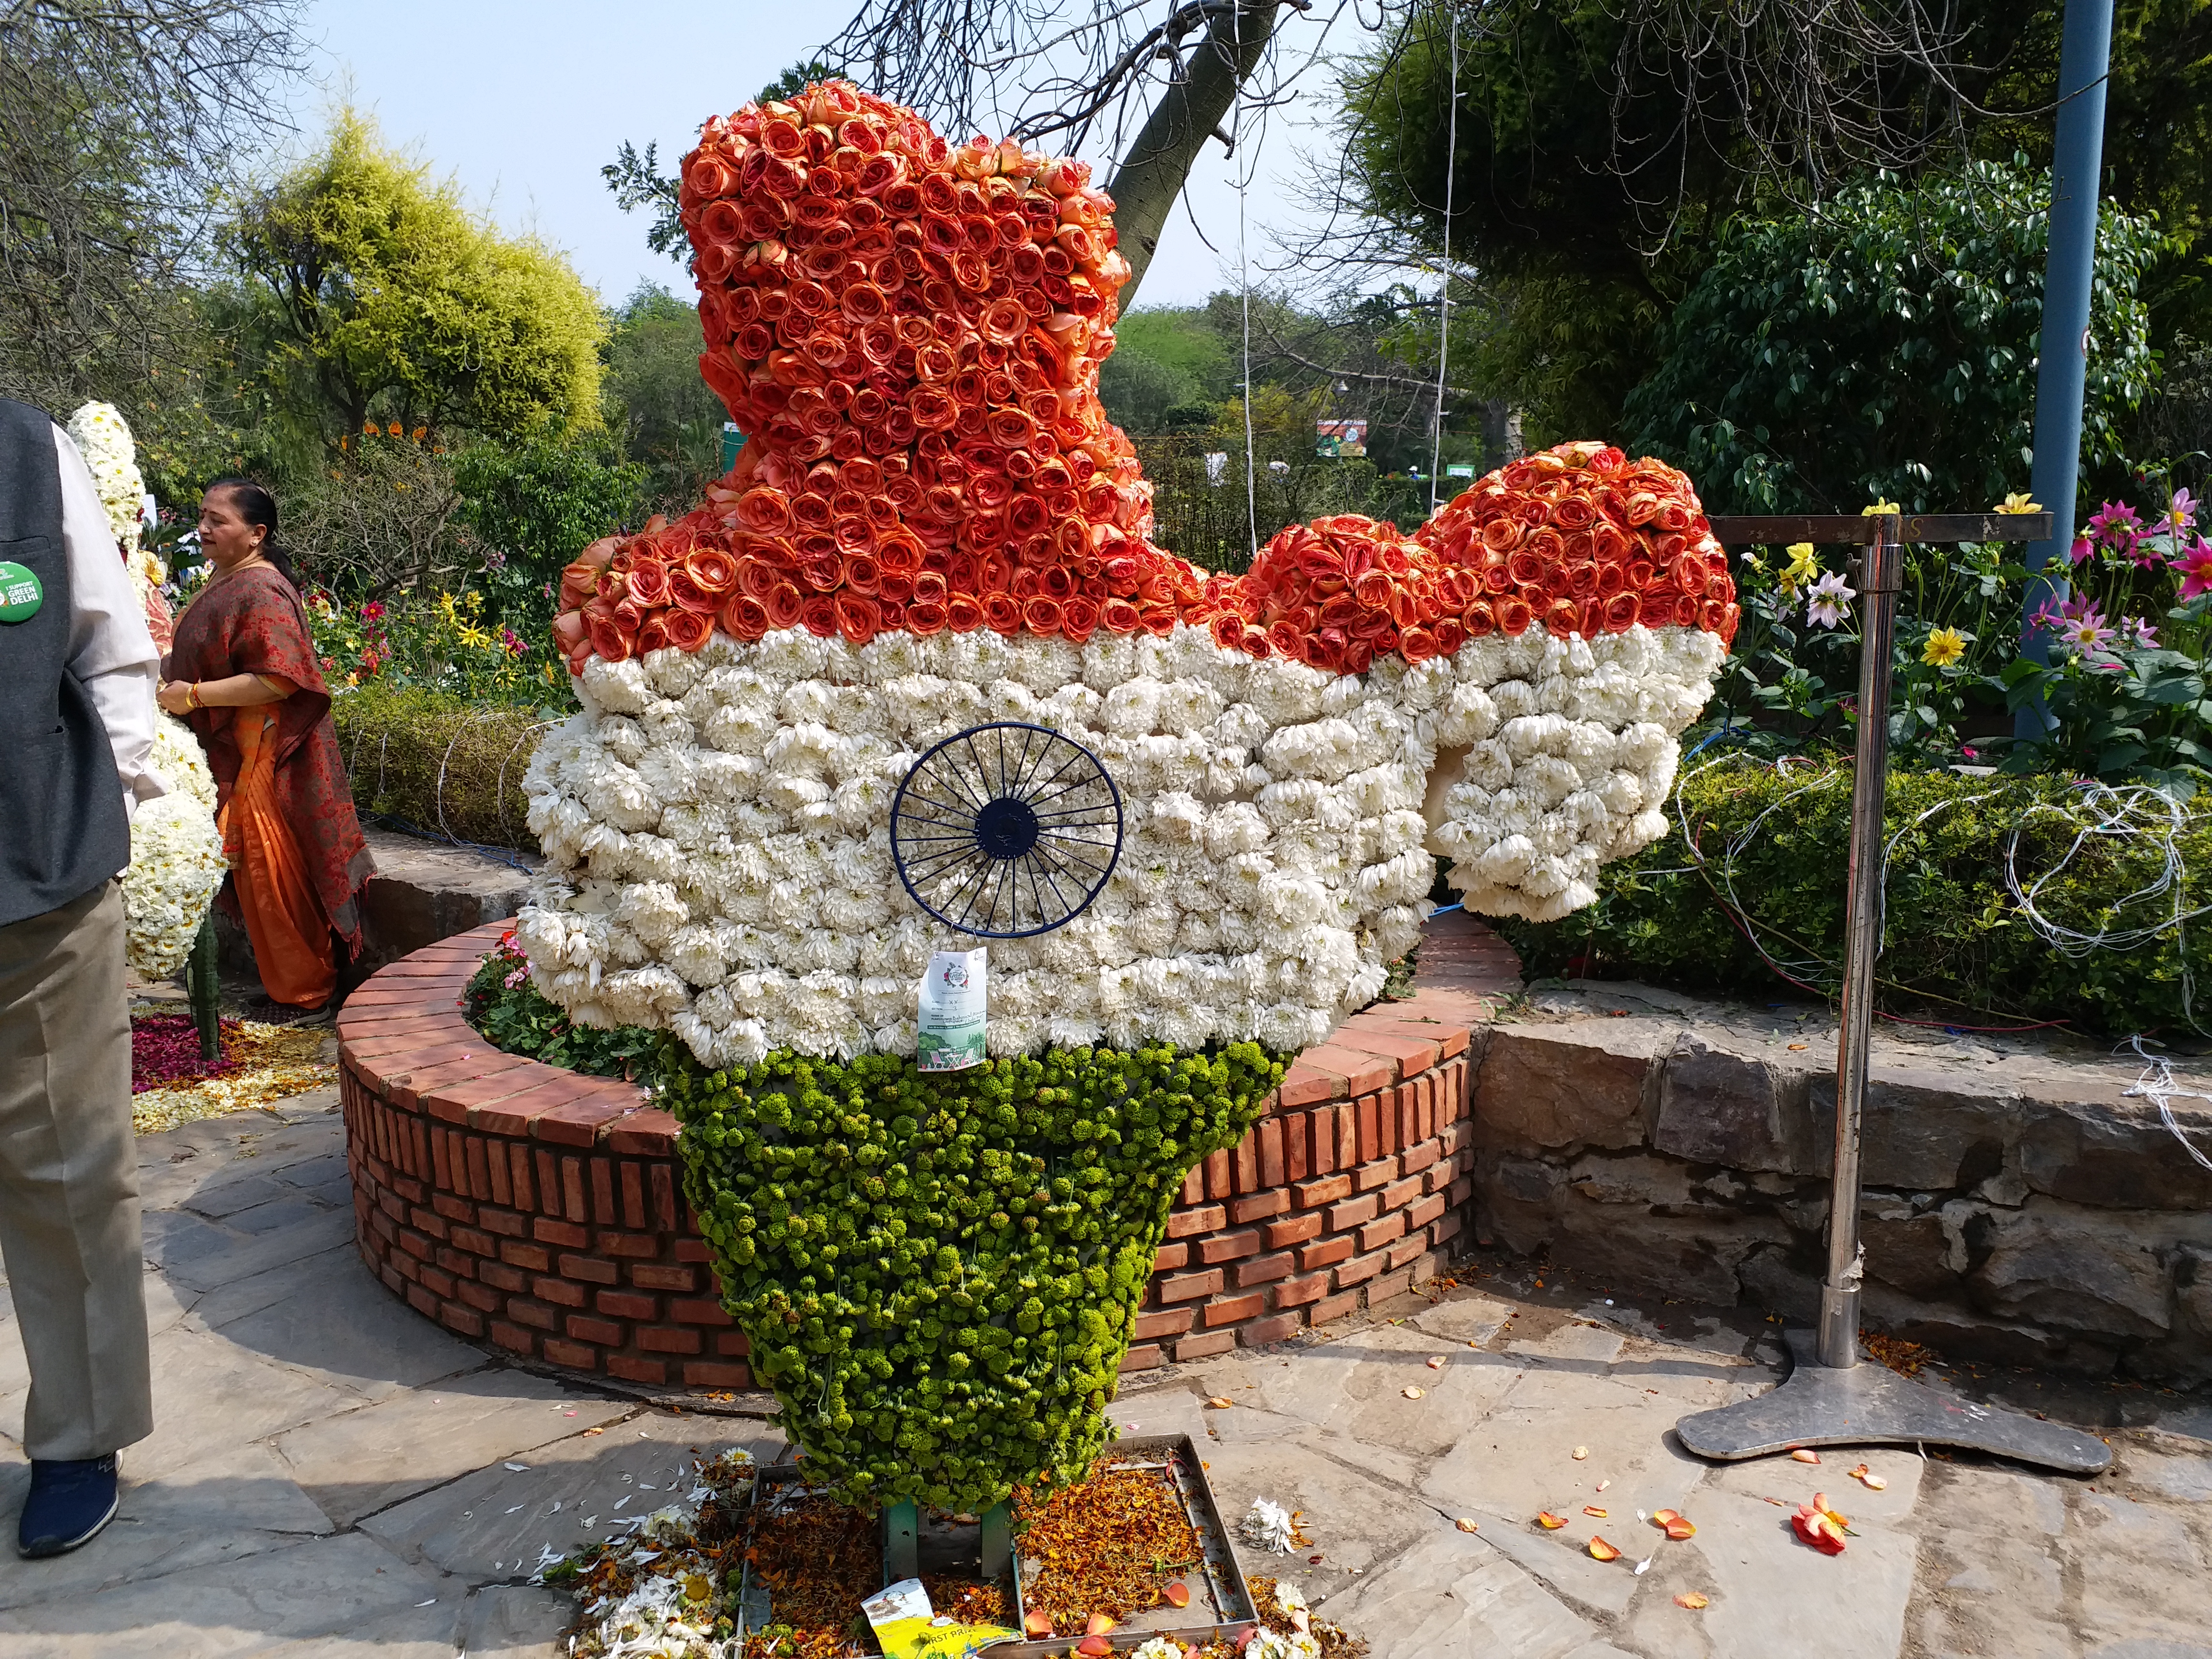 33rd Tourism Garden Festival was organized by Delhi Tourism at Garden of Five Senses